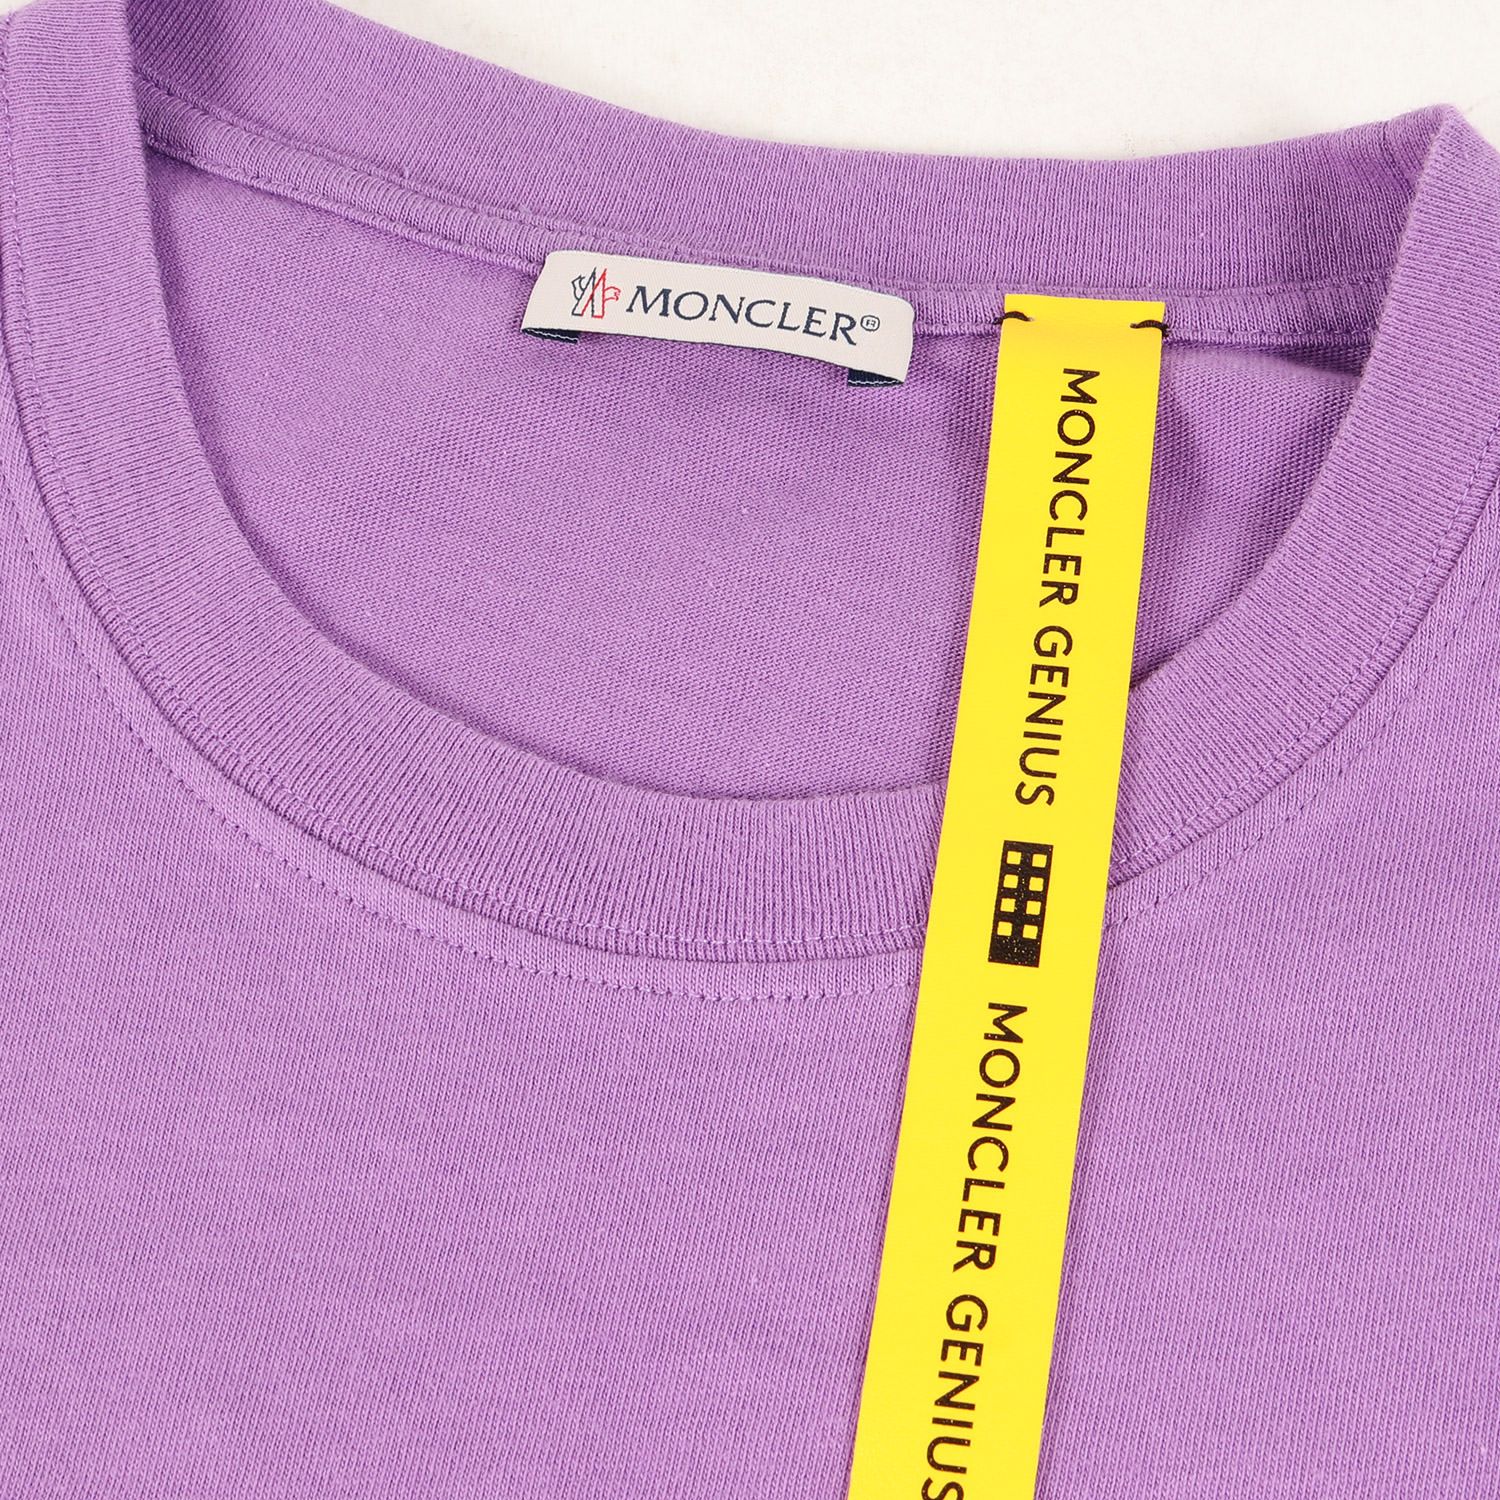 moncler genius fragment t-shirt purpleトップス - Tシャツ 